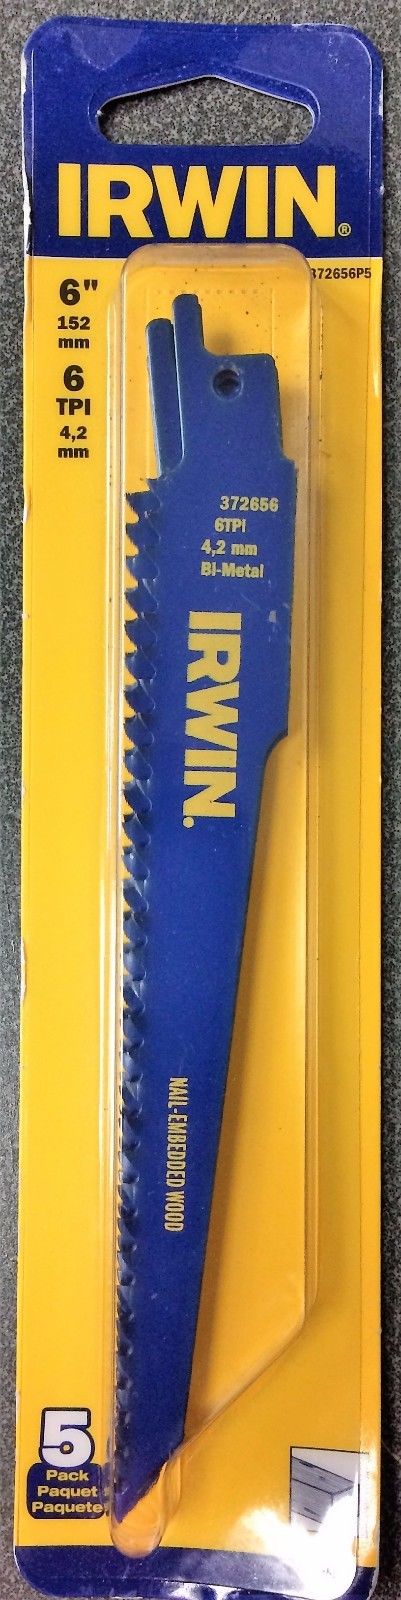 Irwin 372656P5 6" x 6TPI Bi-Metal Reciprocating Saw Blade 5PK USA